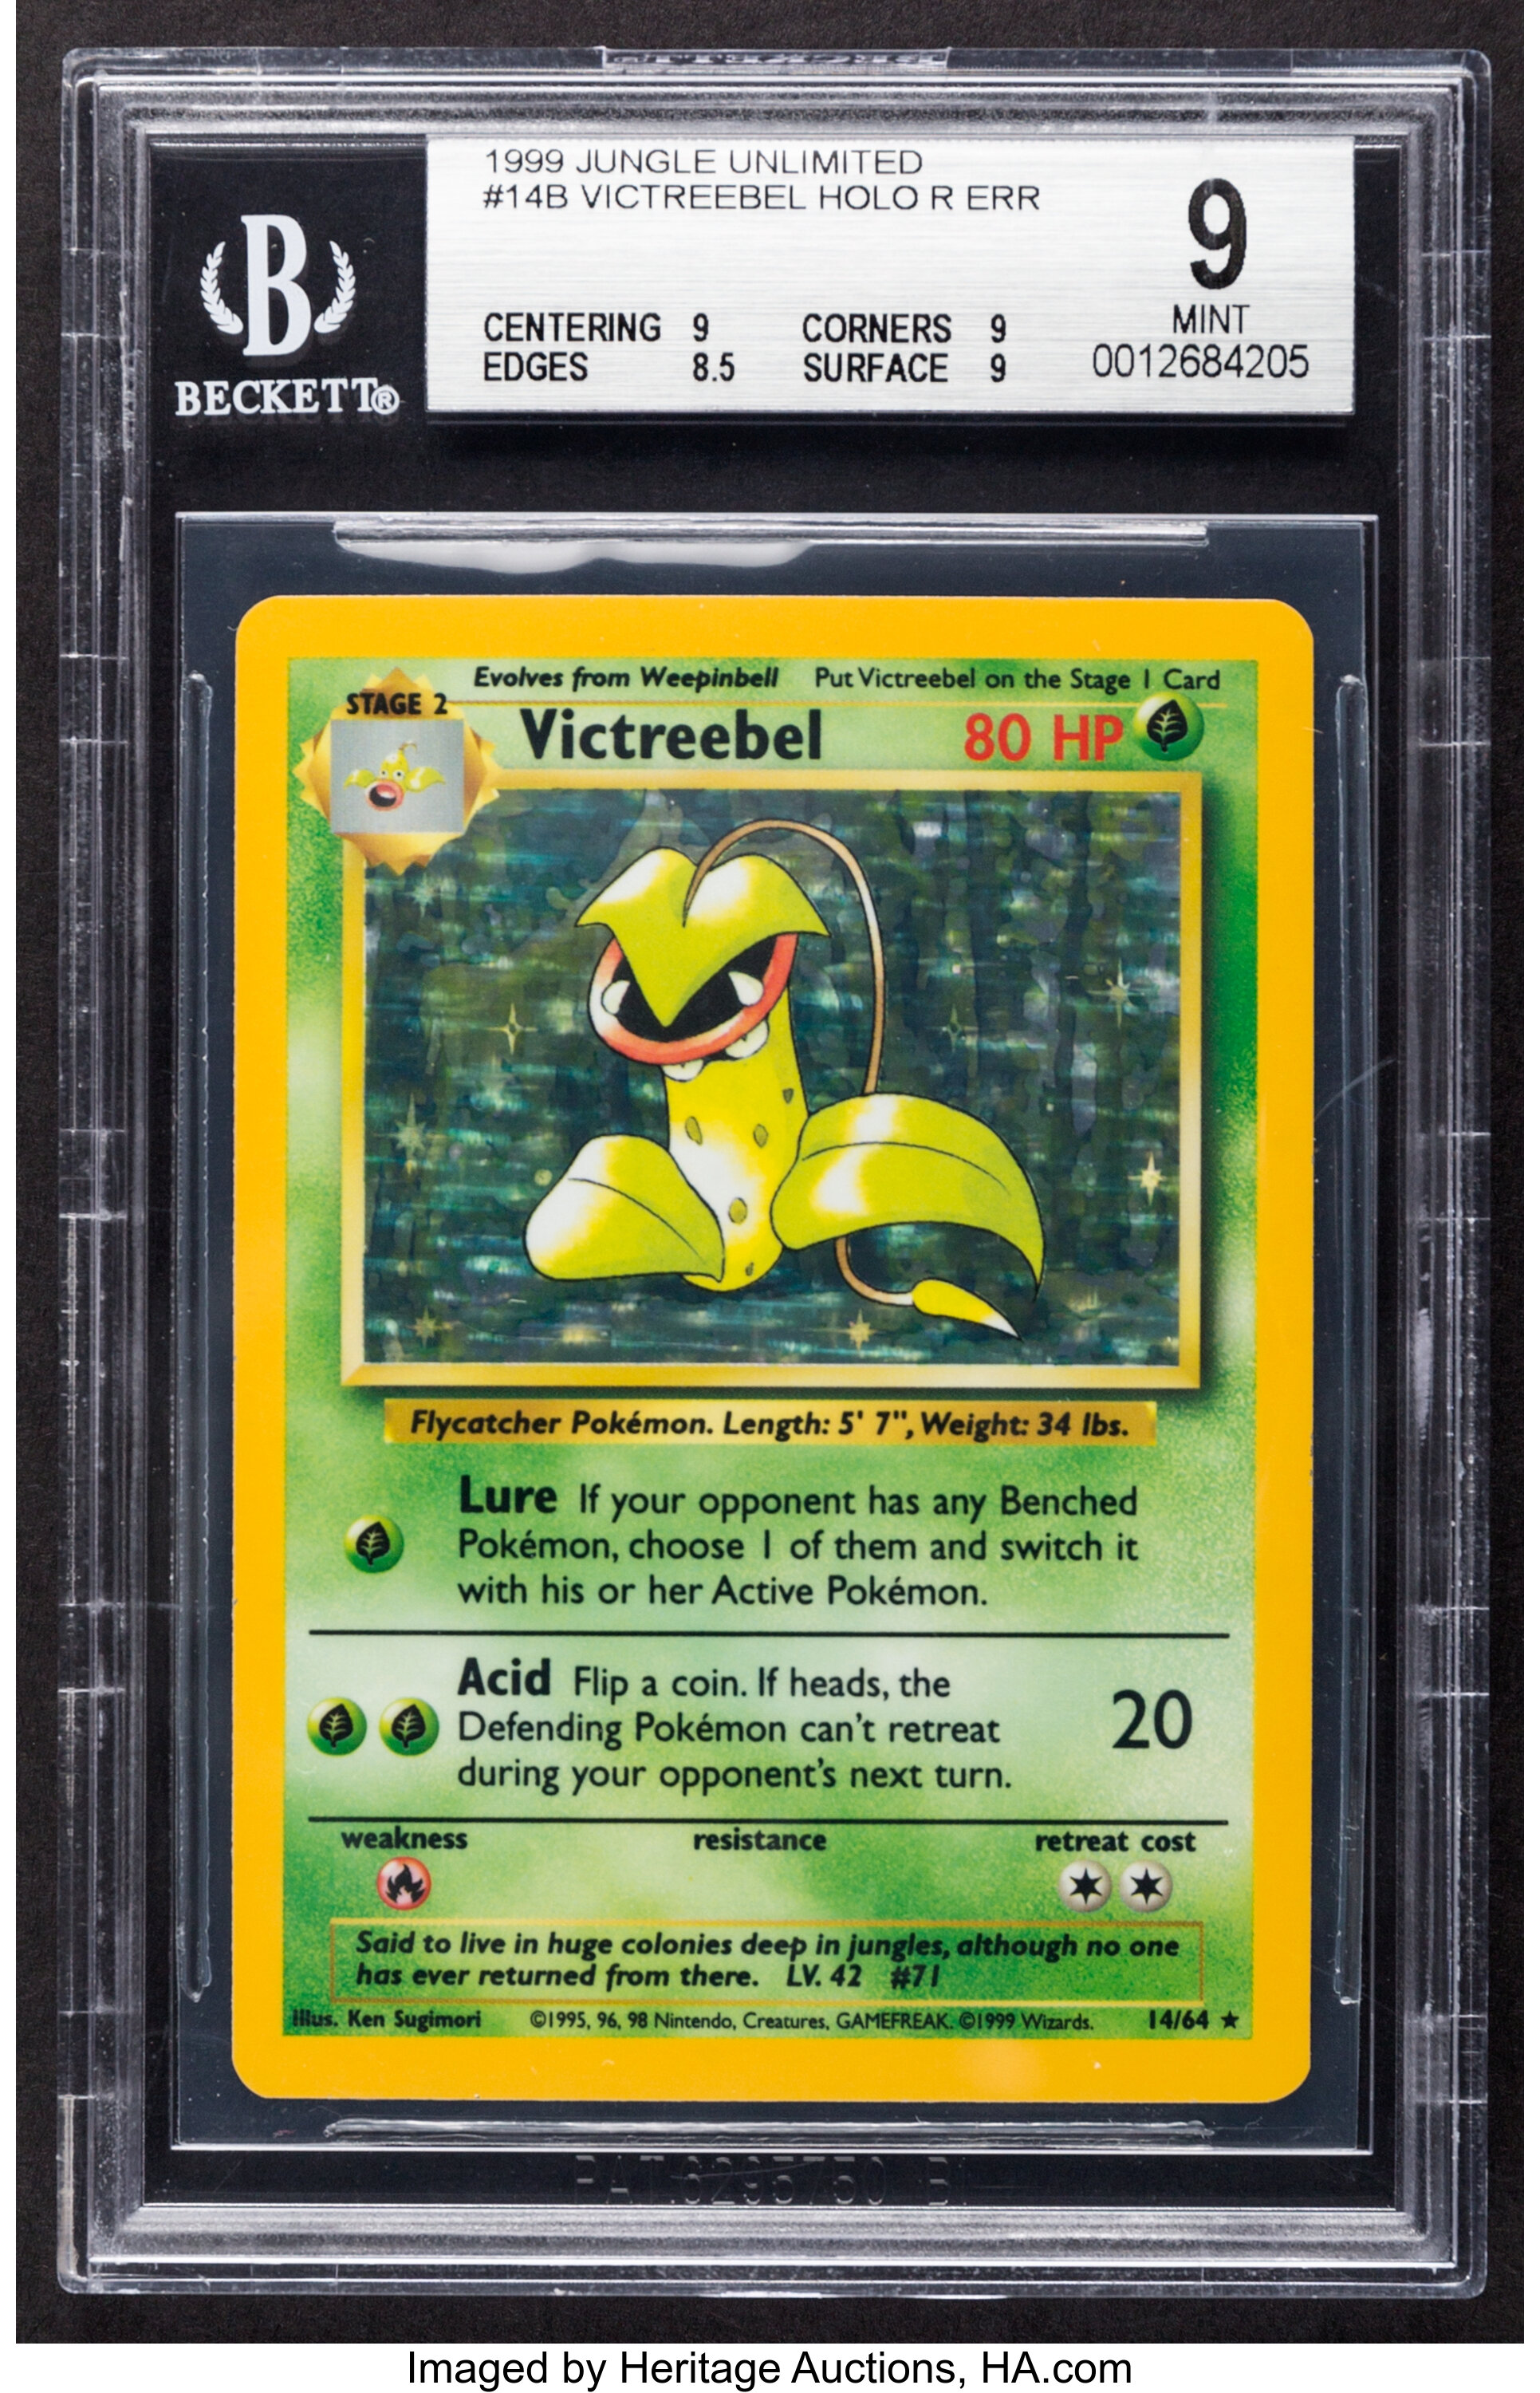 Pokémon Victreebel #14 Unlimited Jungle Set Rare Hologram Trading